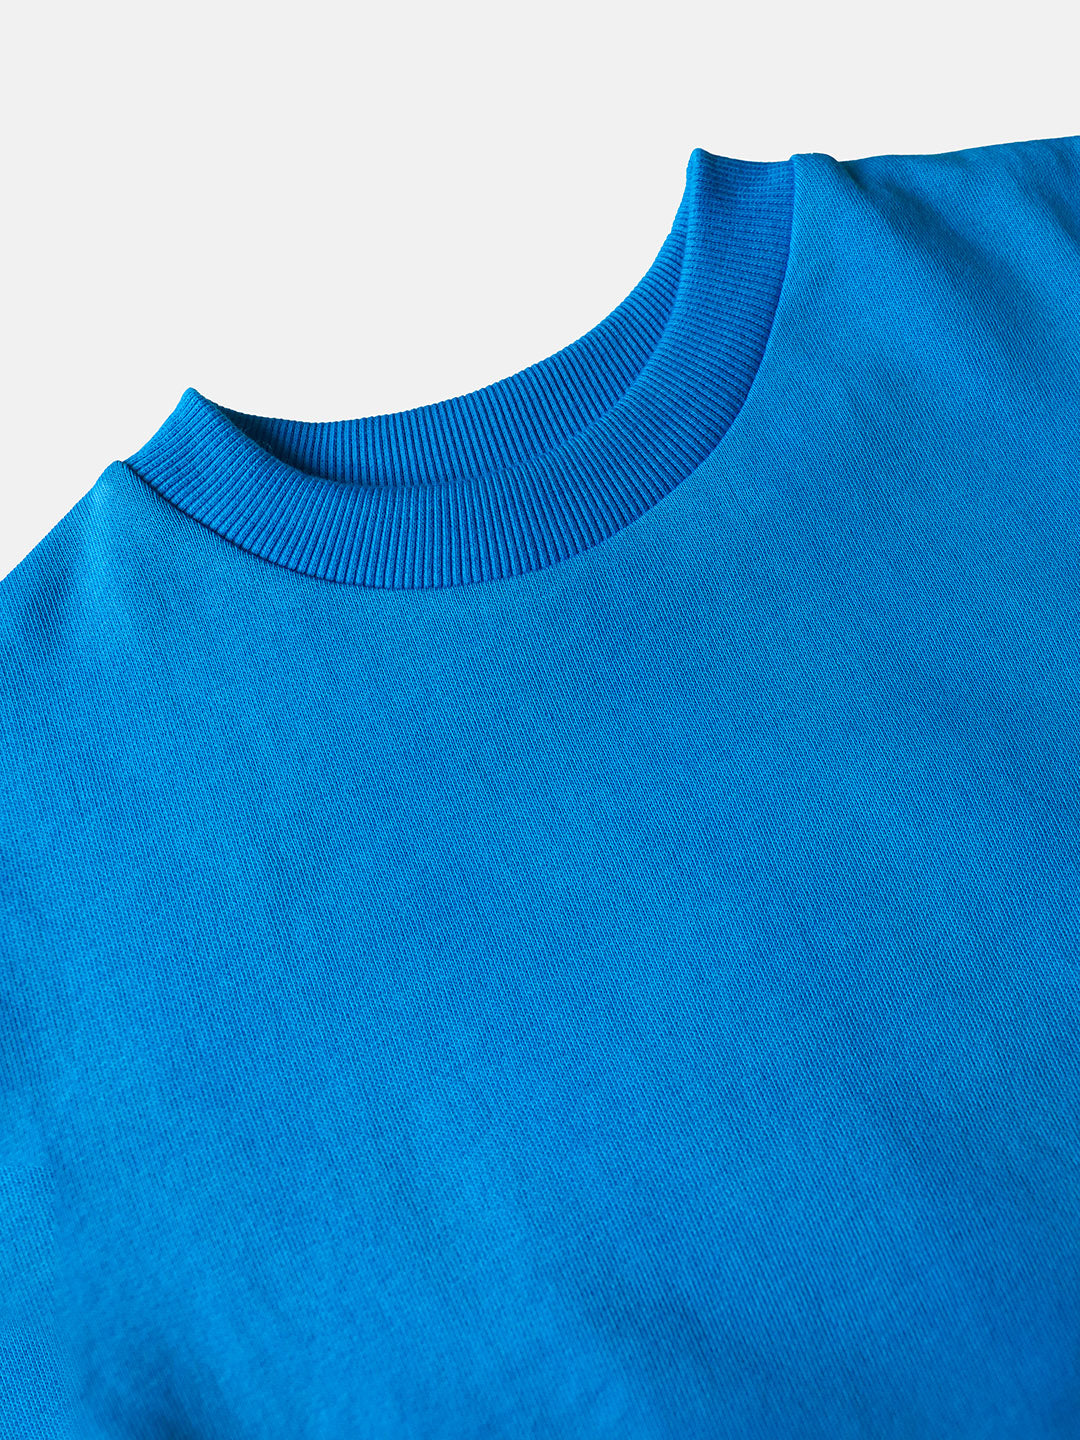 Blue Sweatshirt and Blue Joggers